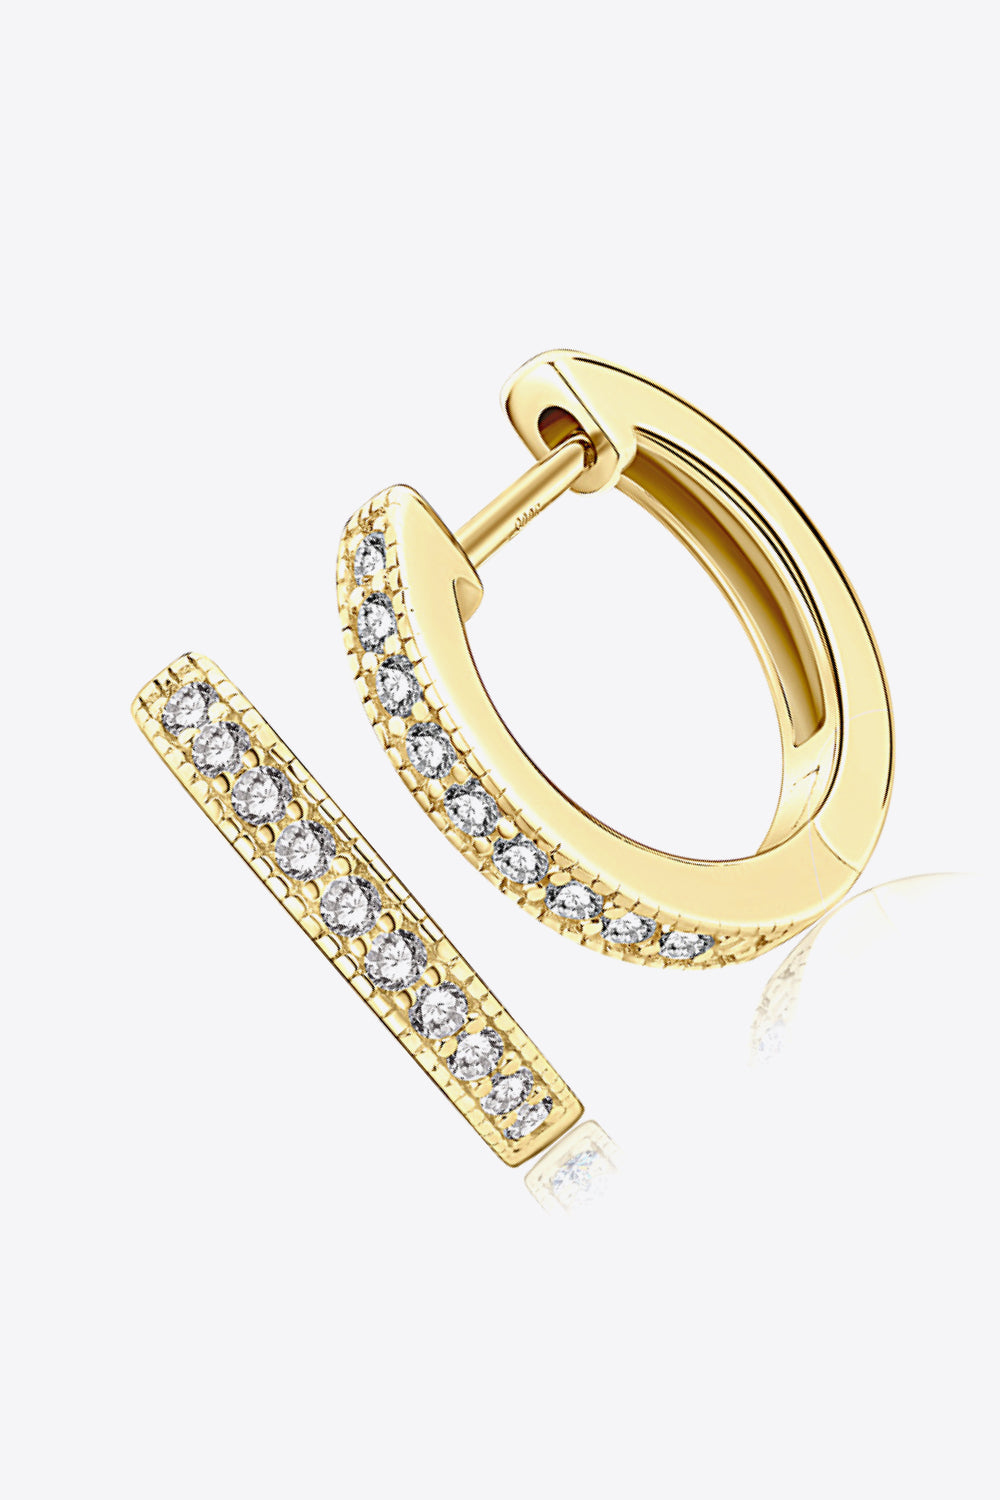 Inlaid Moissanite Hoop Earrings - Shop women apparel, Jewelry, bath & beauty products online - Arwen's Boutique